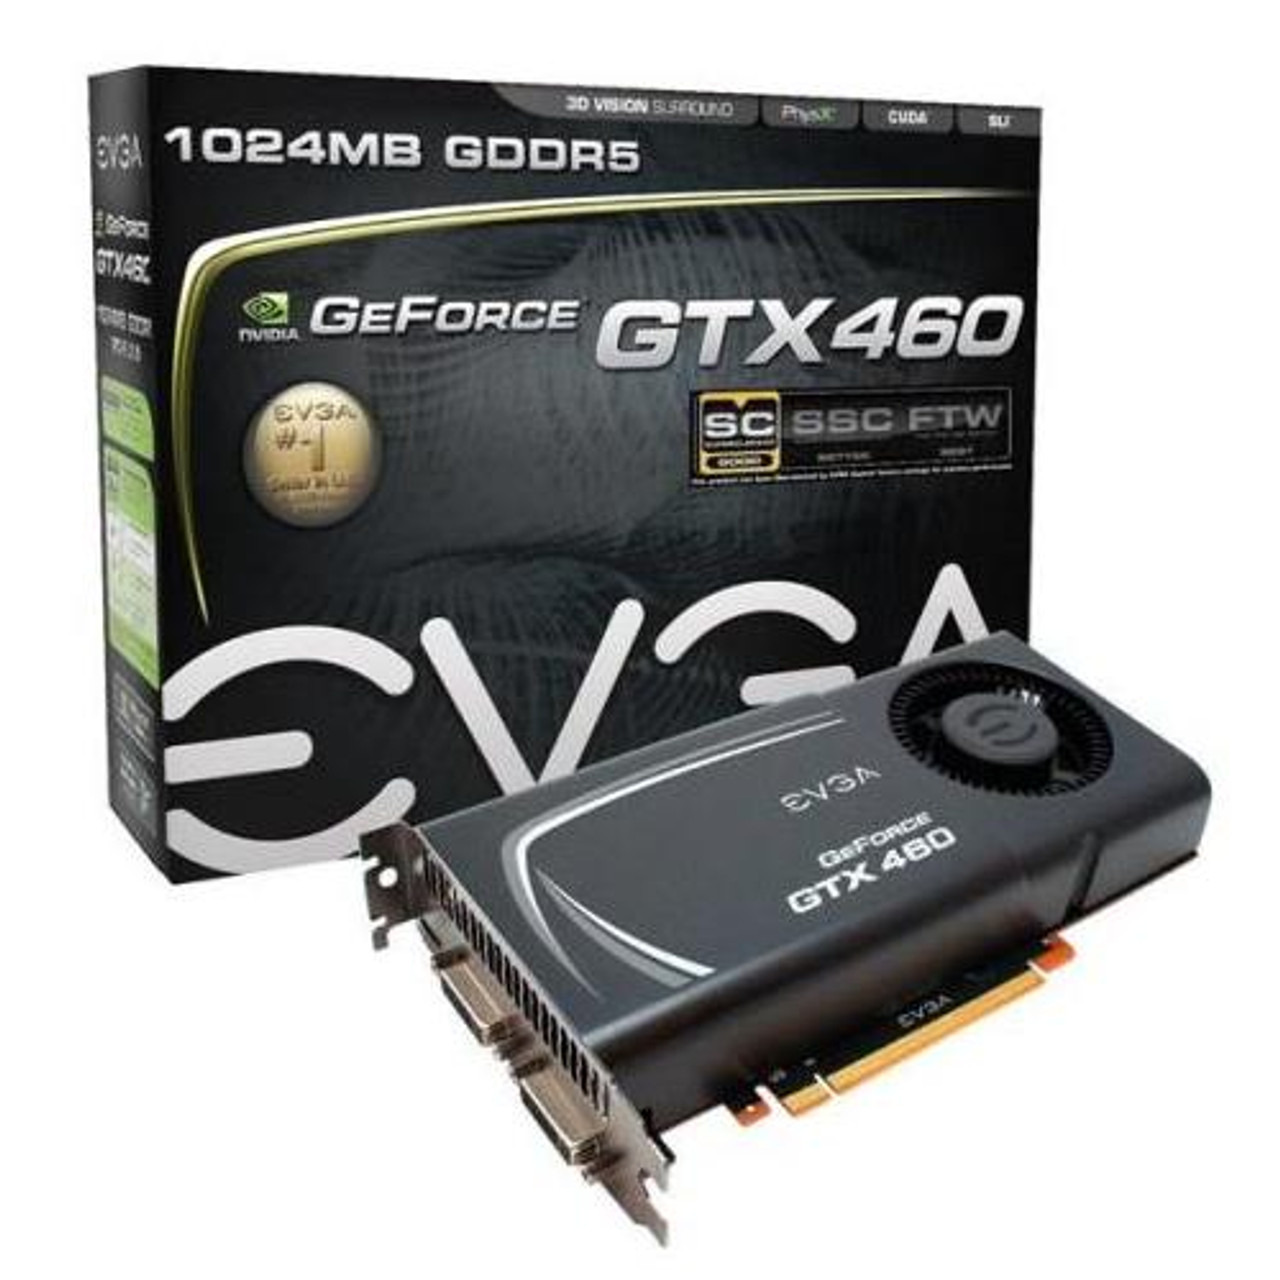 01G-P3-1373-A1 EVGA GeForce GTX 460 SuperClocked EE (External Exhaust) 1GB 256-Bit GDDR5 PCI Express 2.0 x16 Dual DVI/ mini HDMI Video Graphics